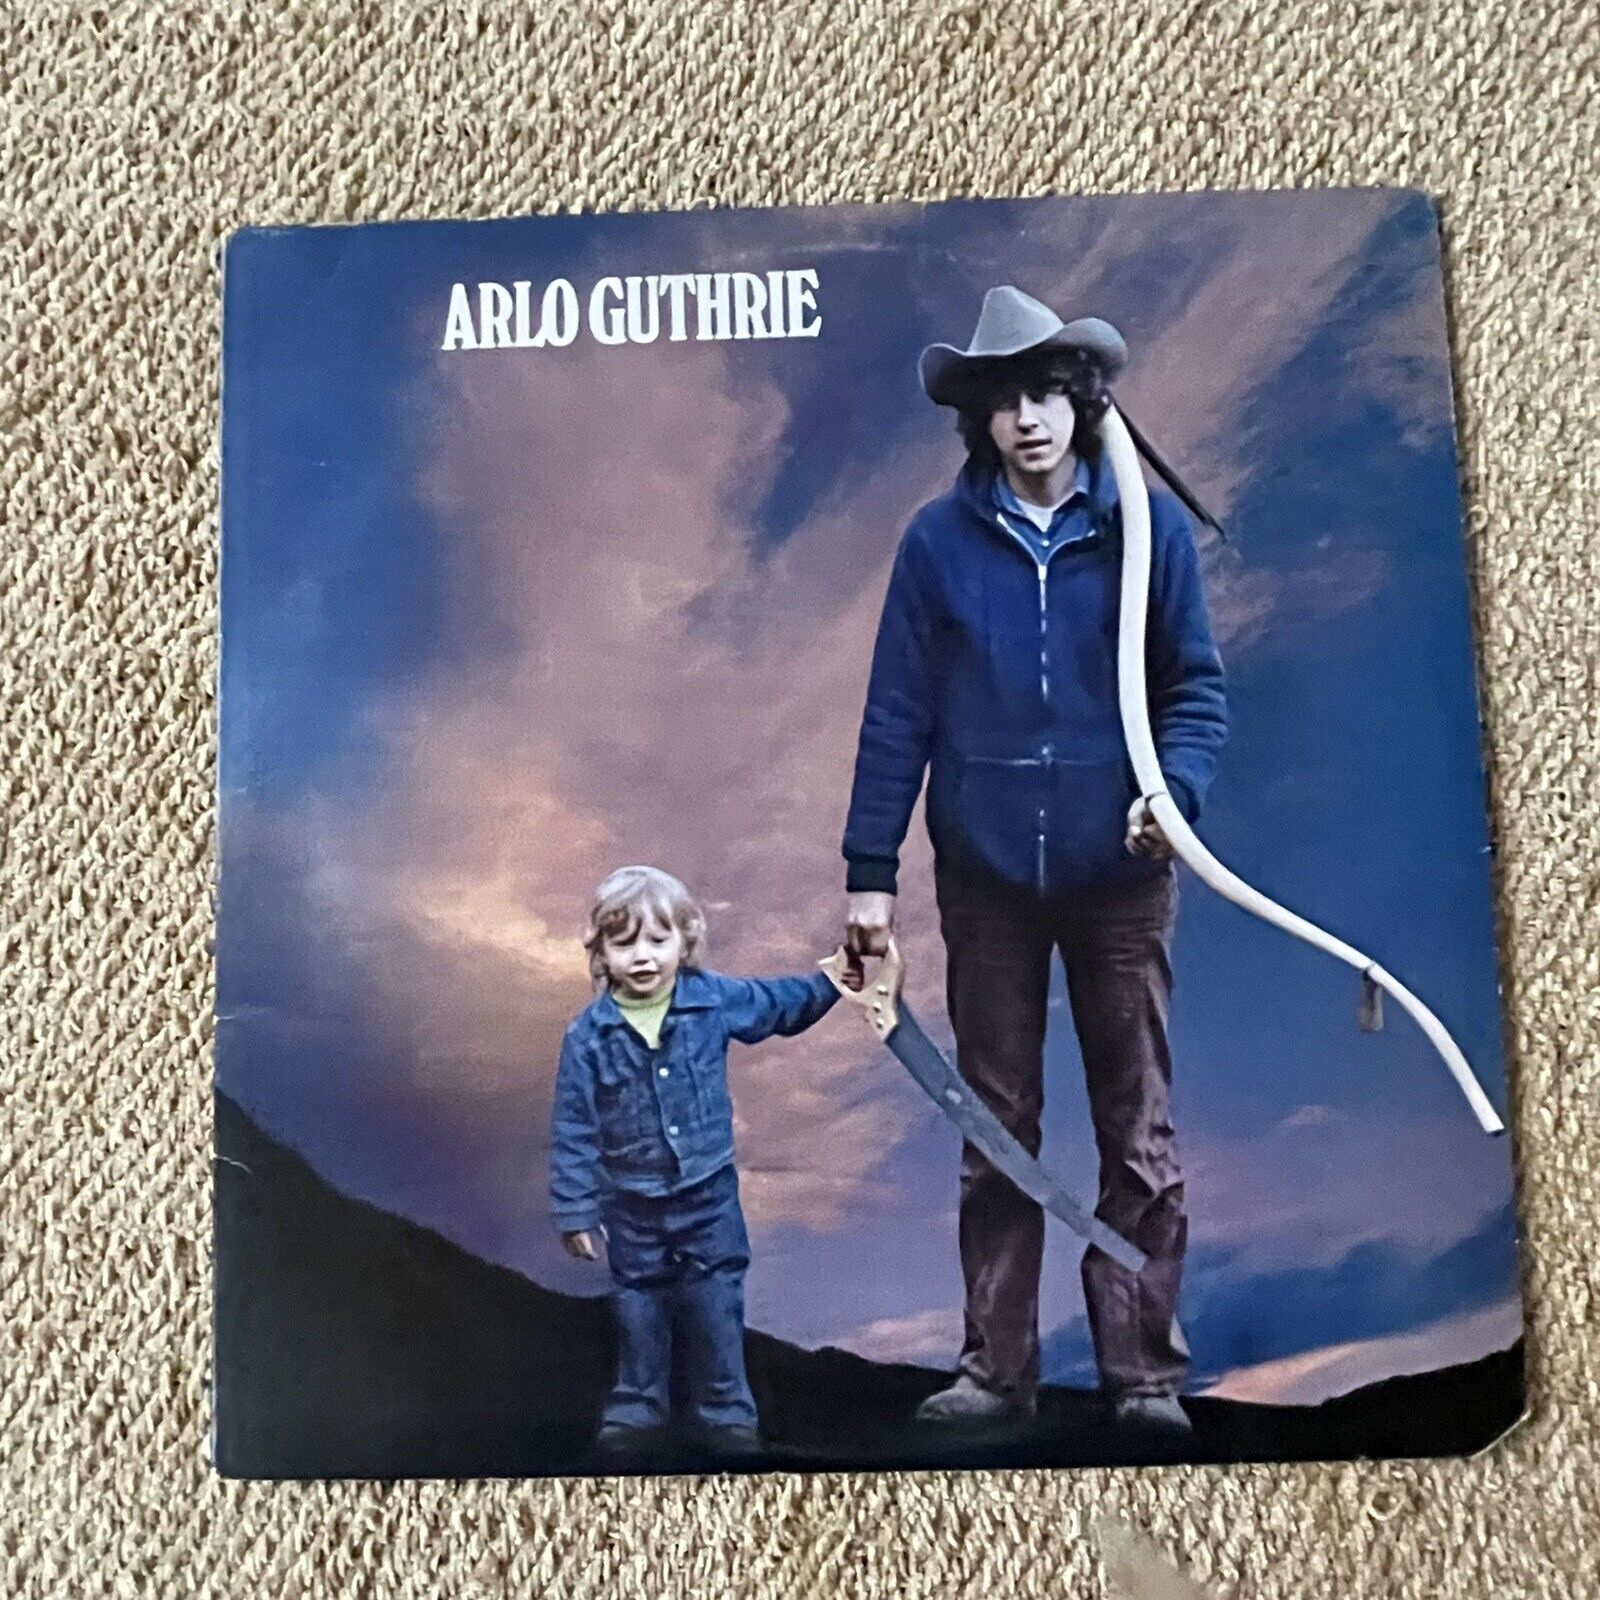 Arlo Guthrie - Arlo Guthrie, Vinyl LP, Vintage 1974, Warner Bros. Records